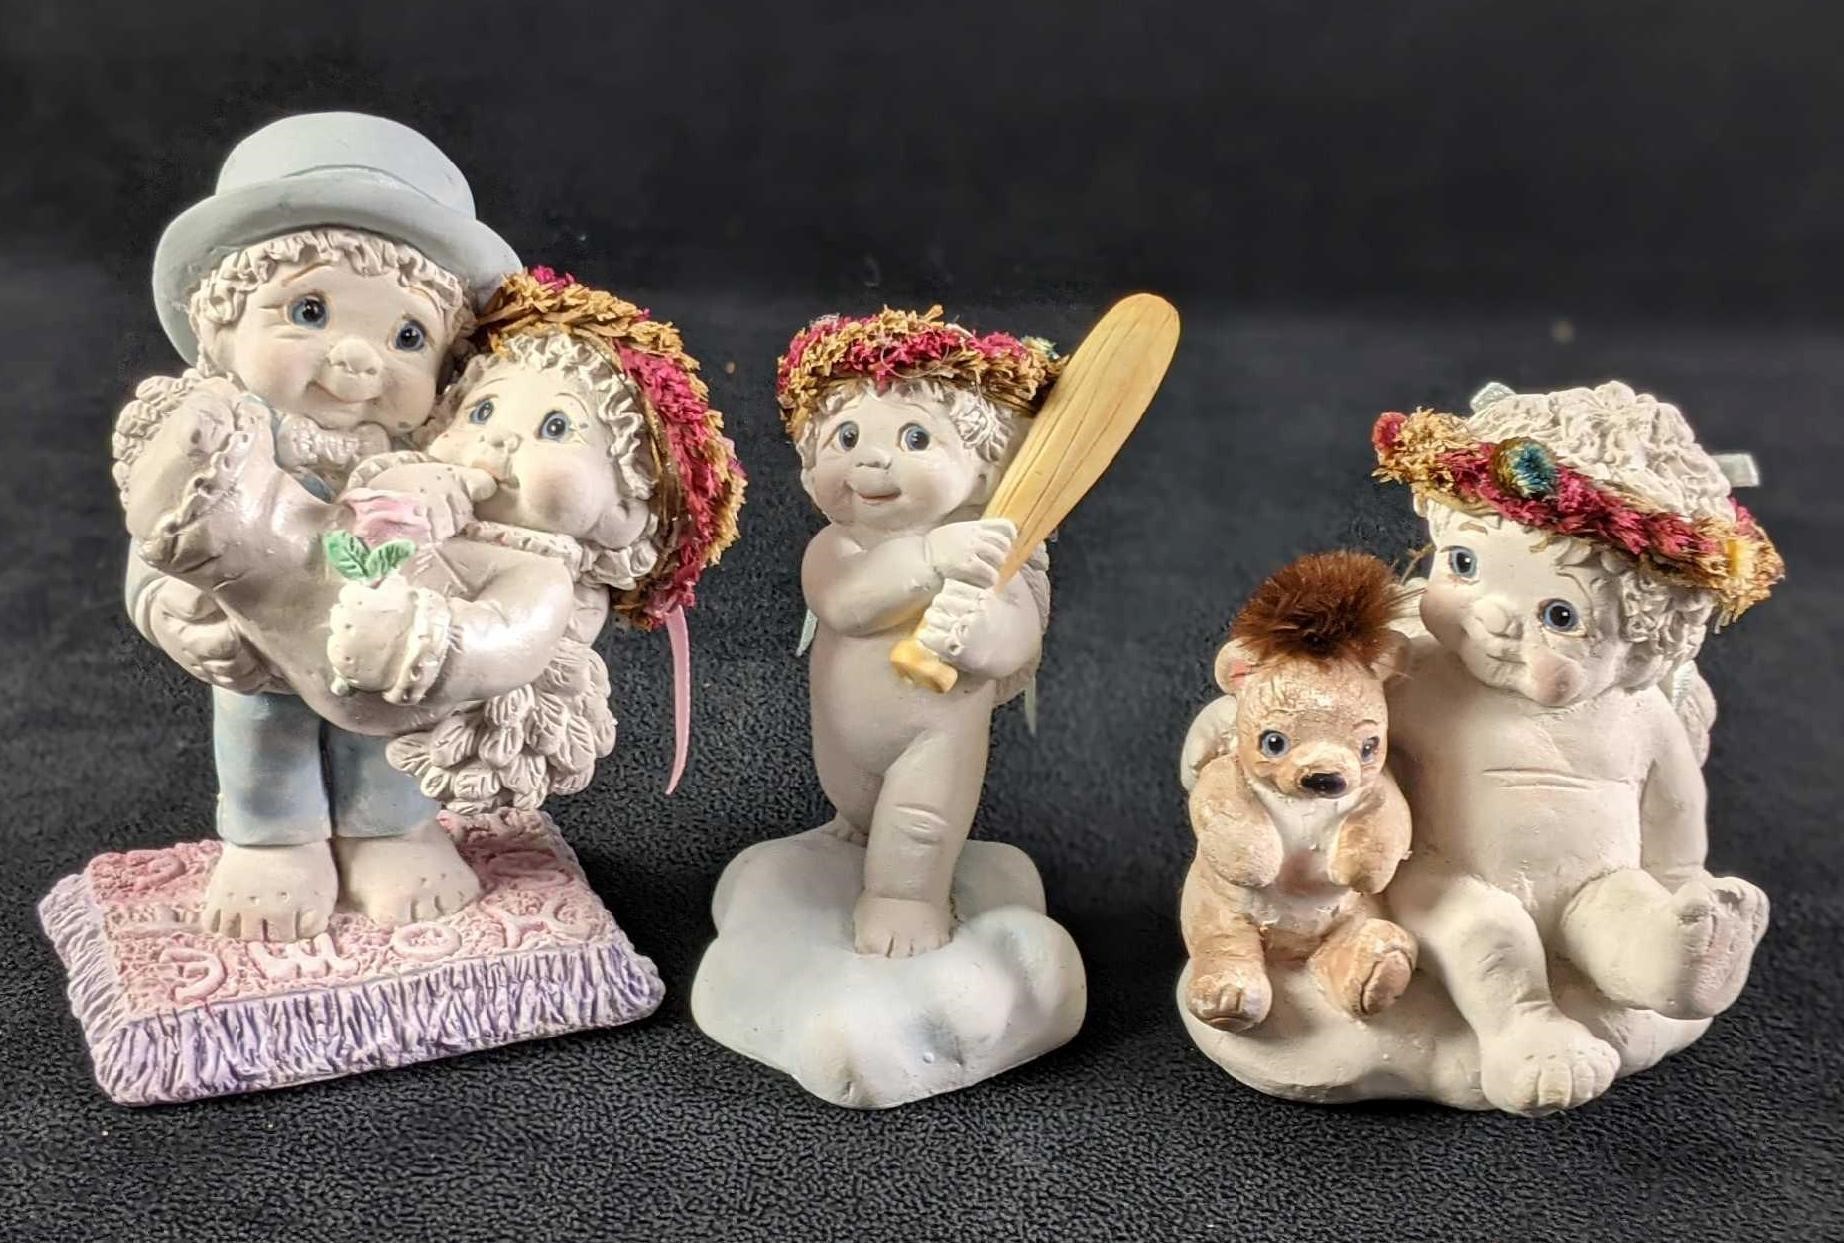 Three Dreamciles Baby Figurines (1) "Newlyweds" (2